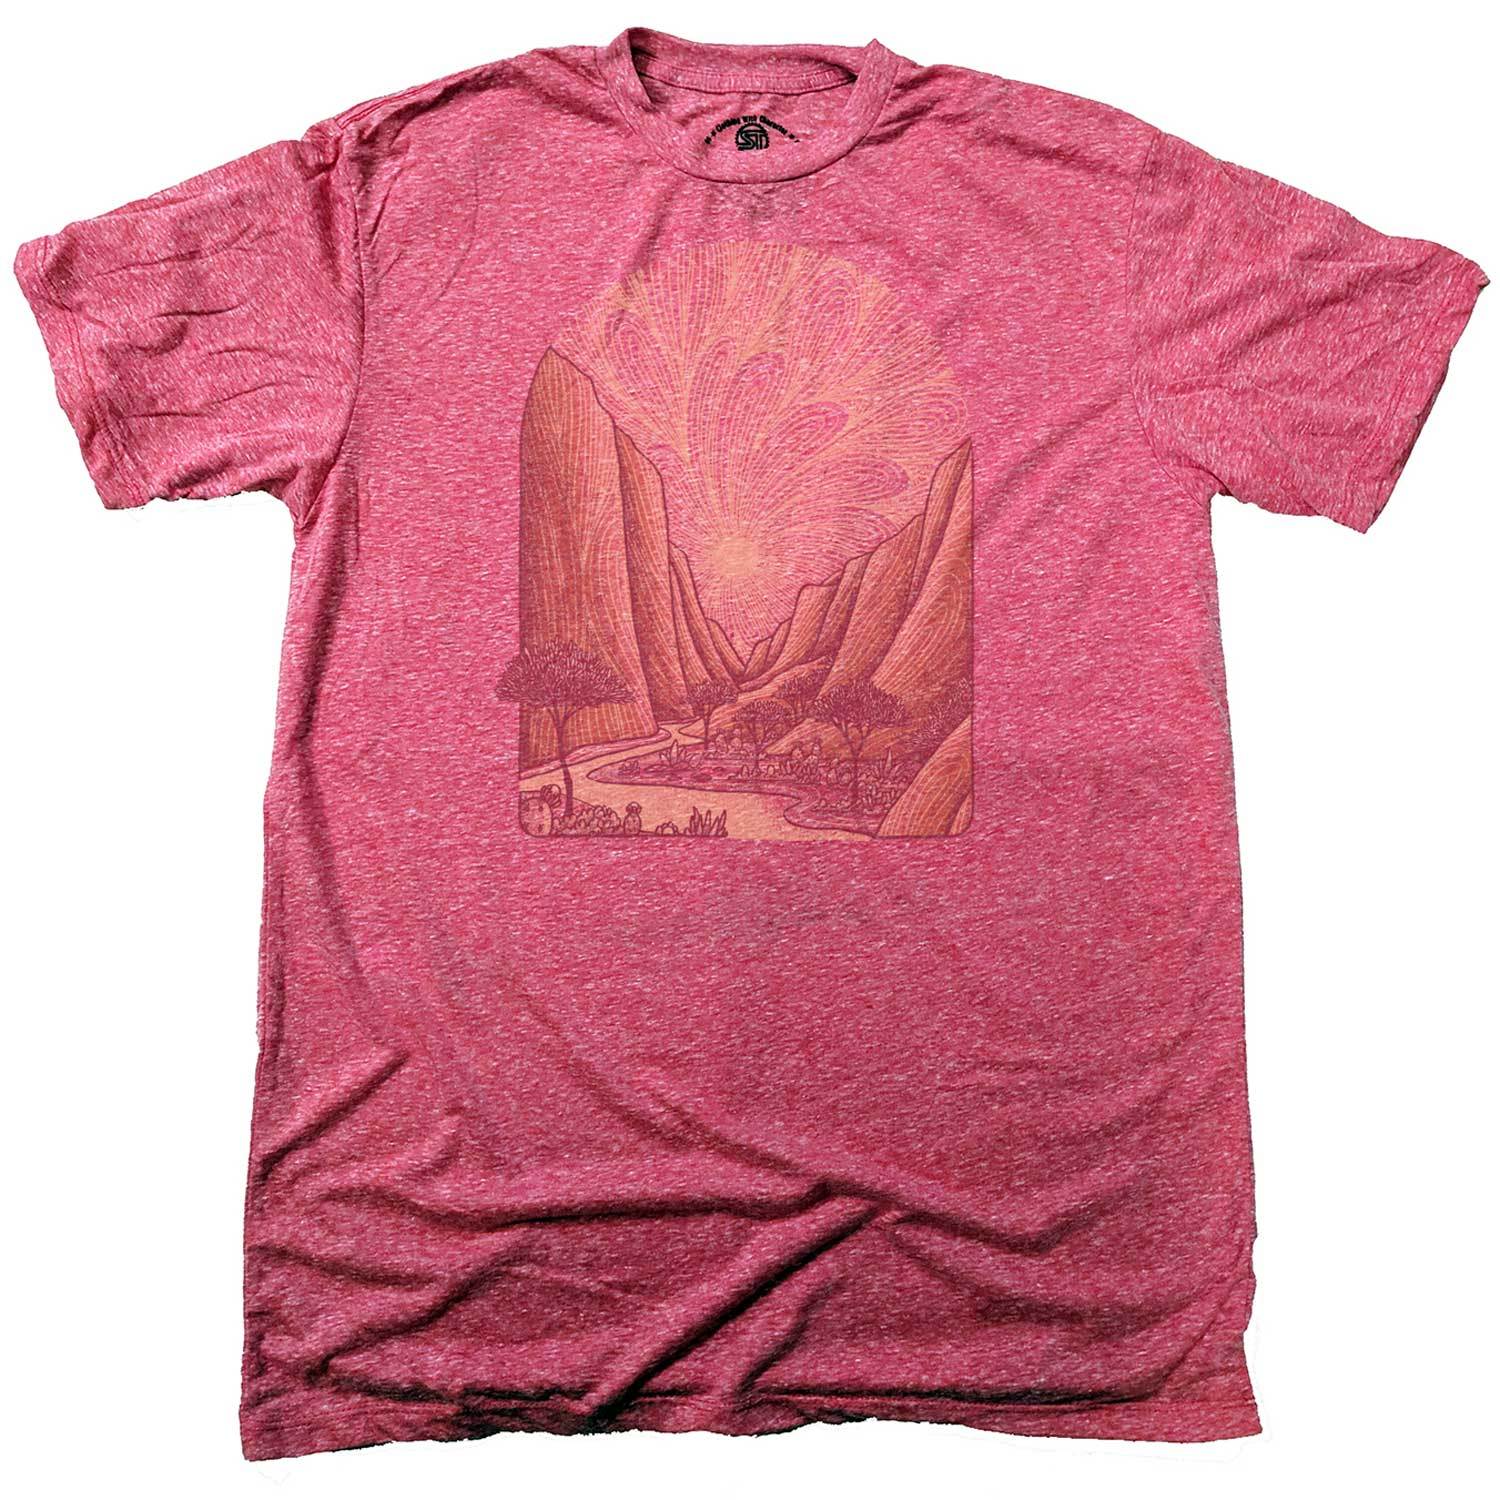 Women's Sunset T-shirt | Design by Dylan Fant